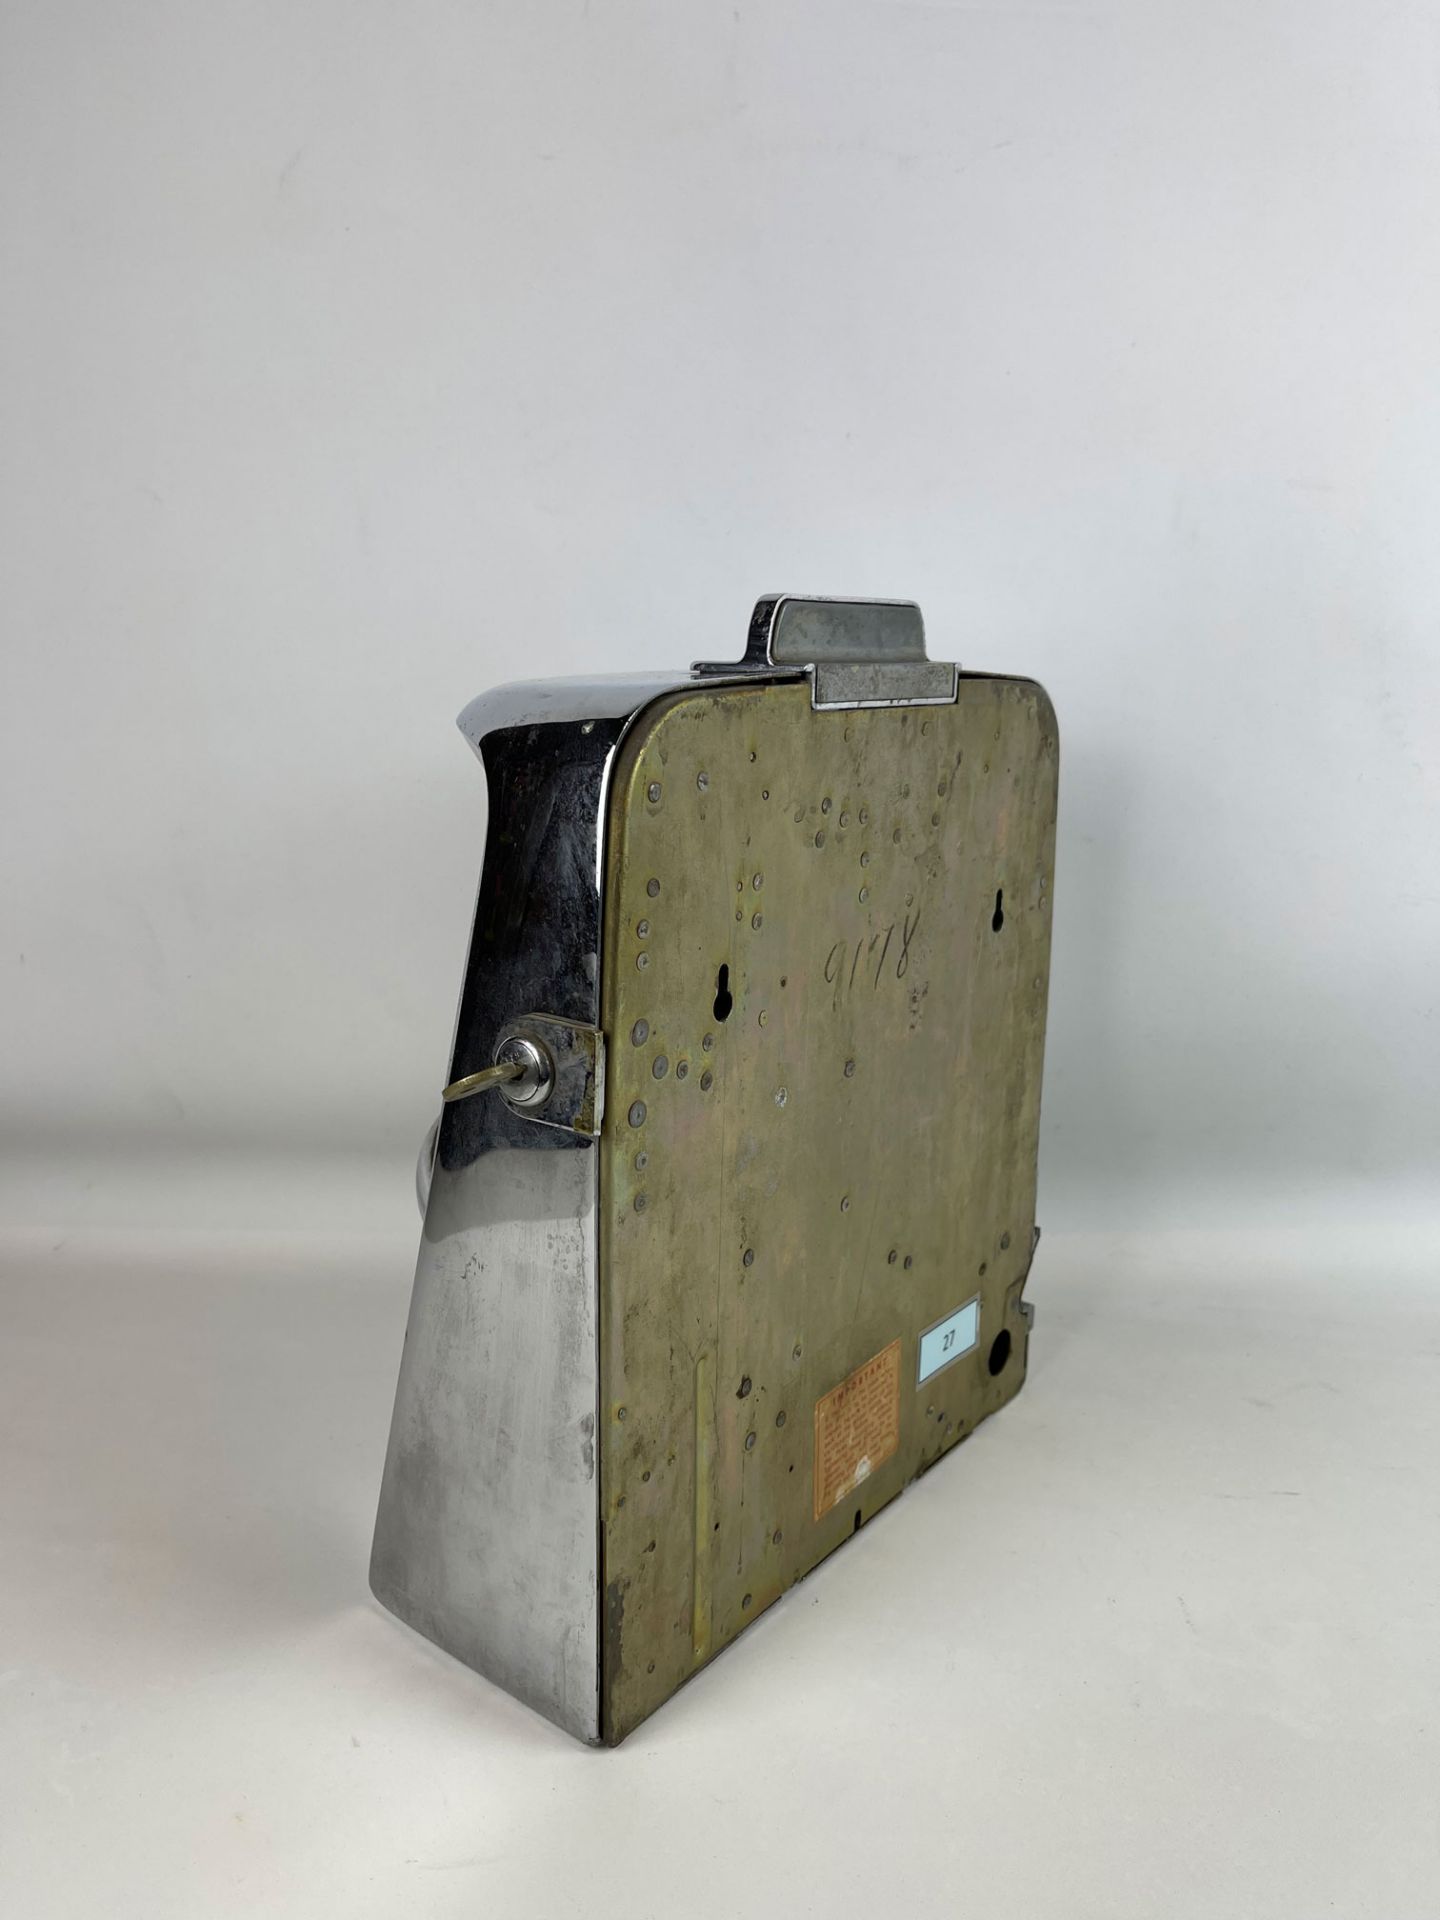 1955-1958 Seebug Wallbox Model 3WA - Image 6 of 12